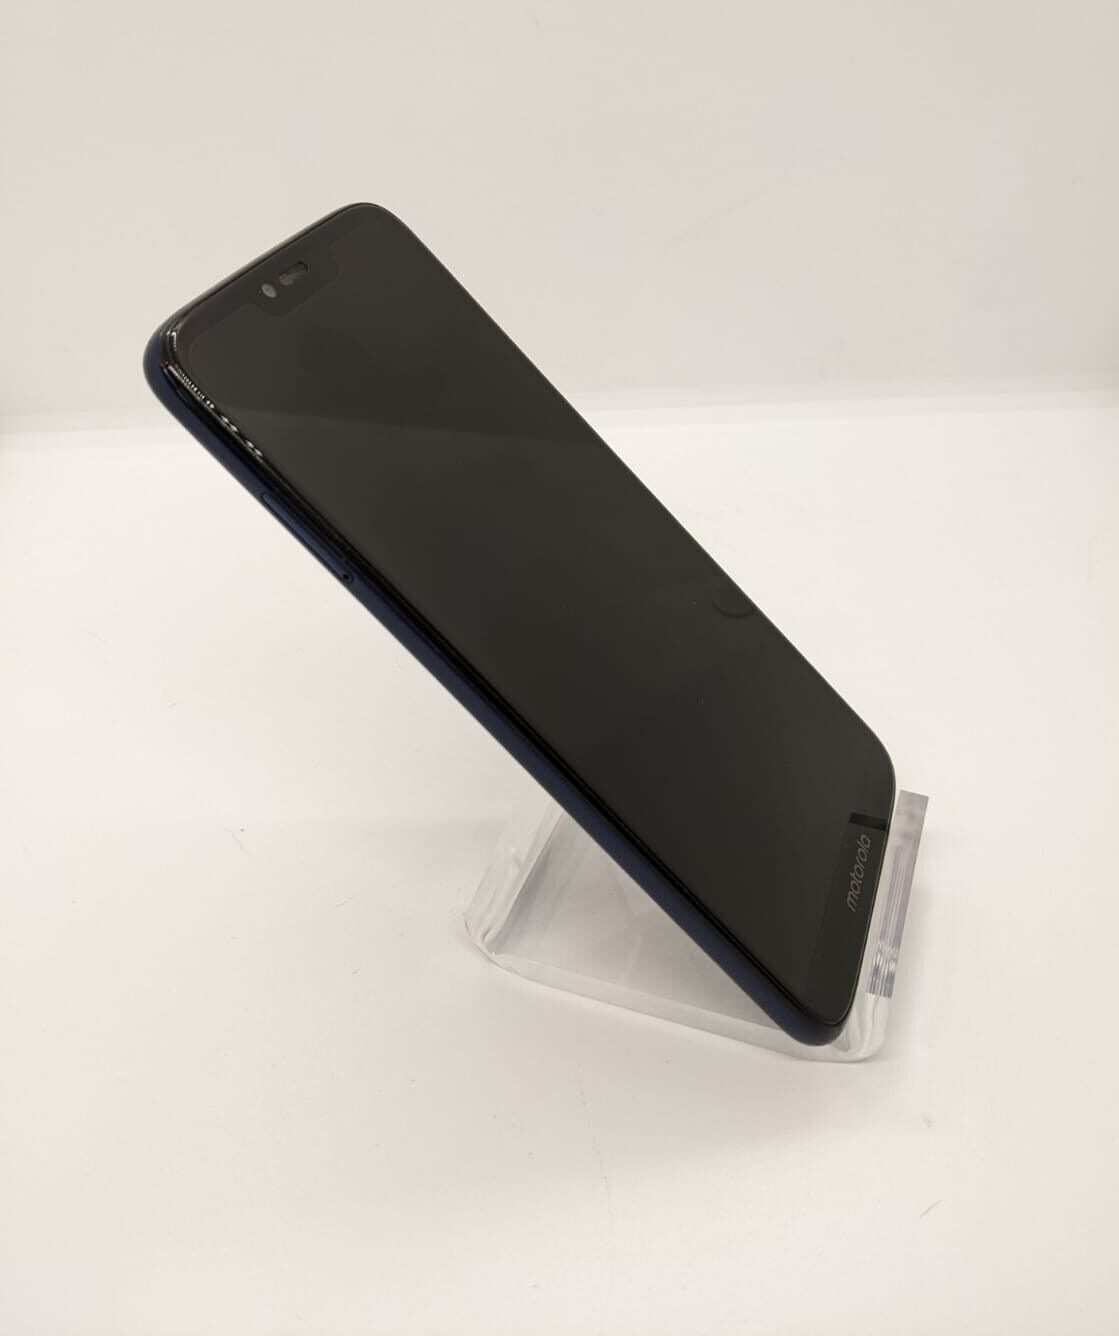 Moto G7 Power 32GB Verizon Android 4G LTE Blue Smartphone XT1955-6 (B-)